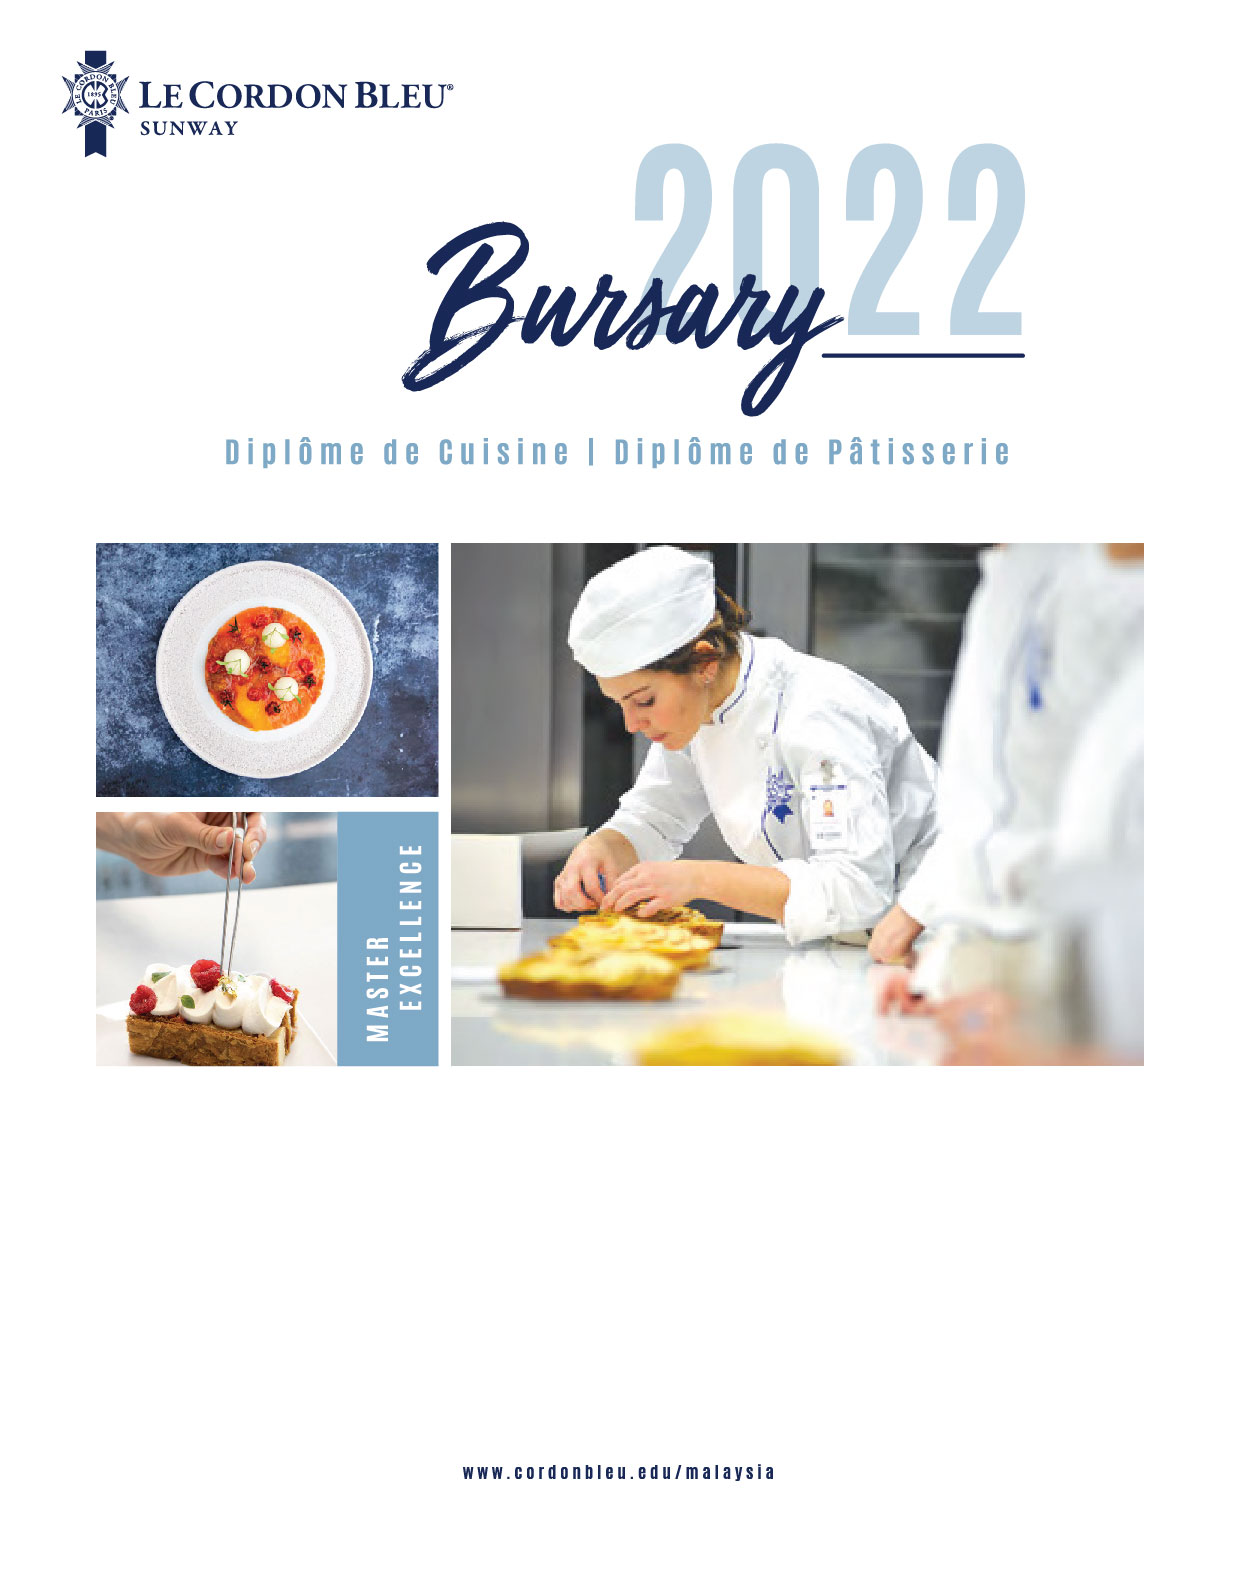 Le Cordon Bleu - Bursary 2022 (Cuisine Pastry)